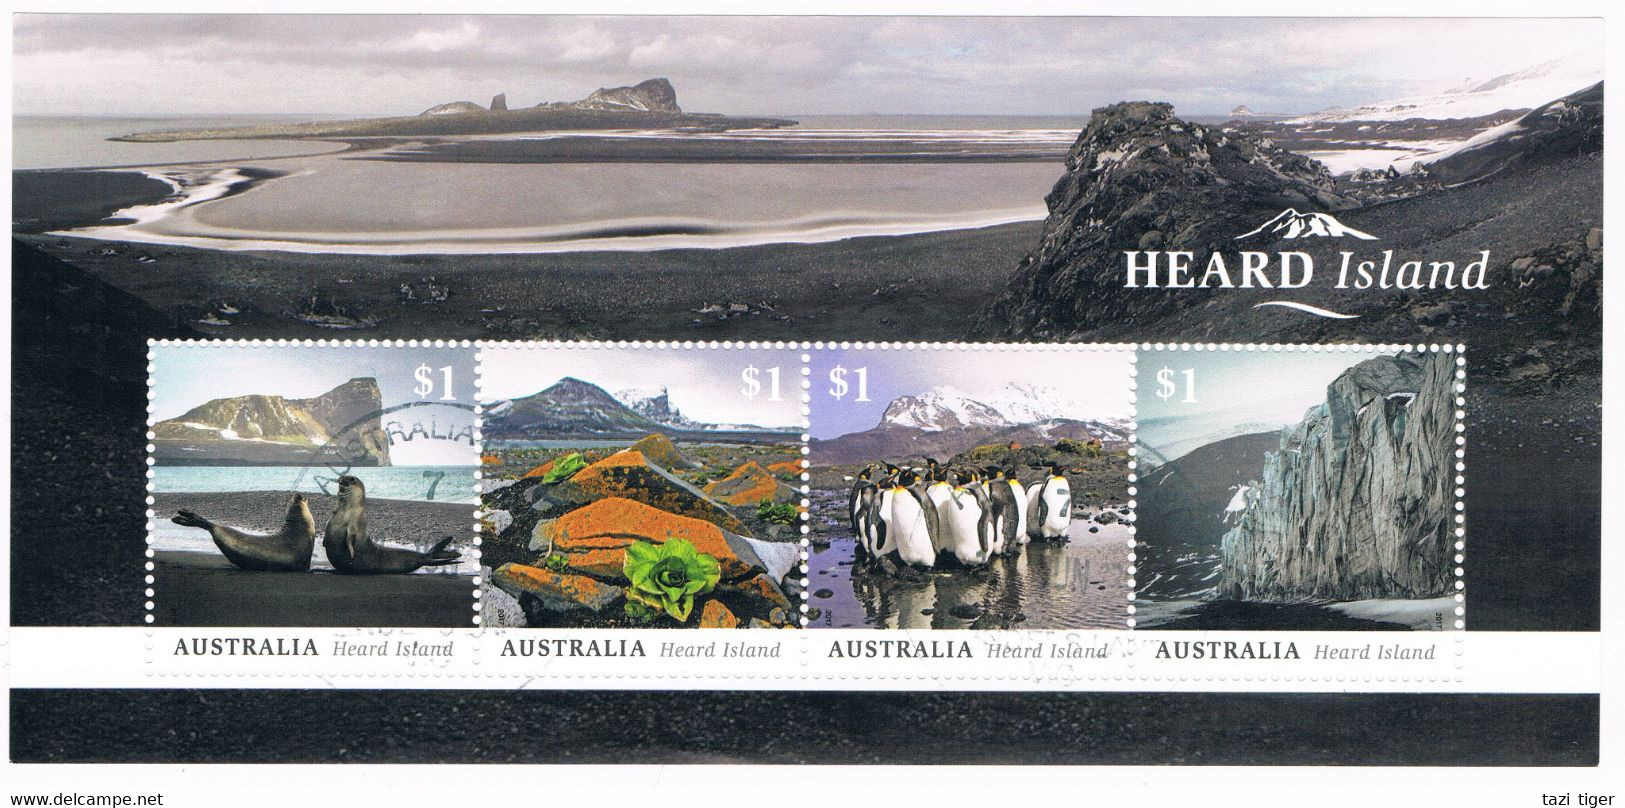 AUSTRALIA • 2017 • Heard Island - Minisheet • Commercially Used - Used Stamps